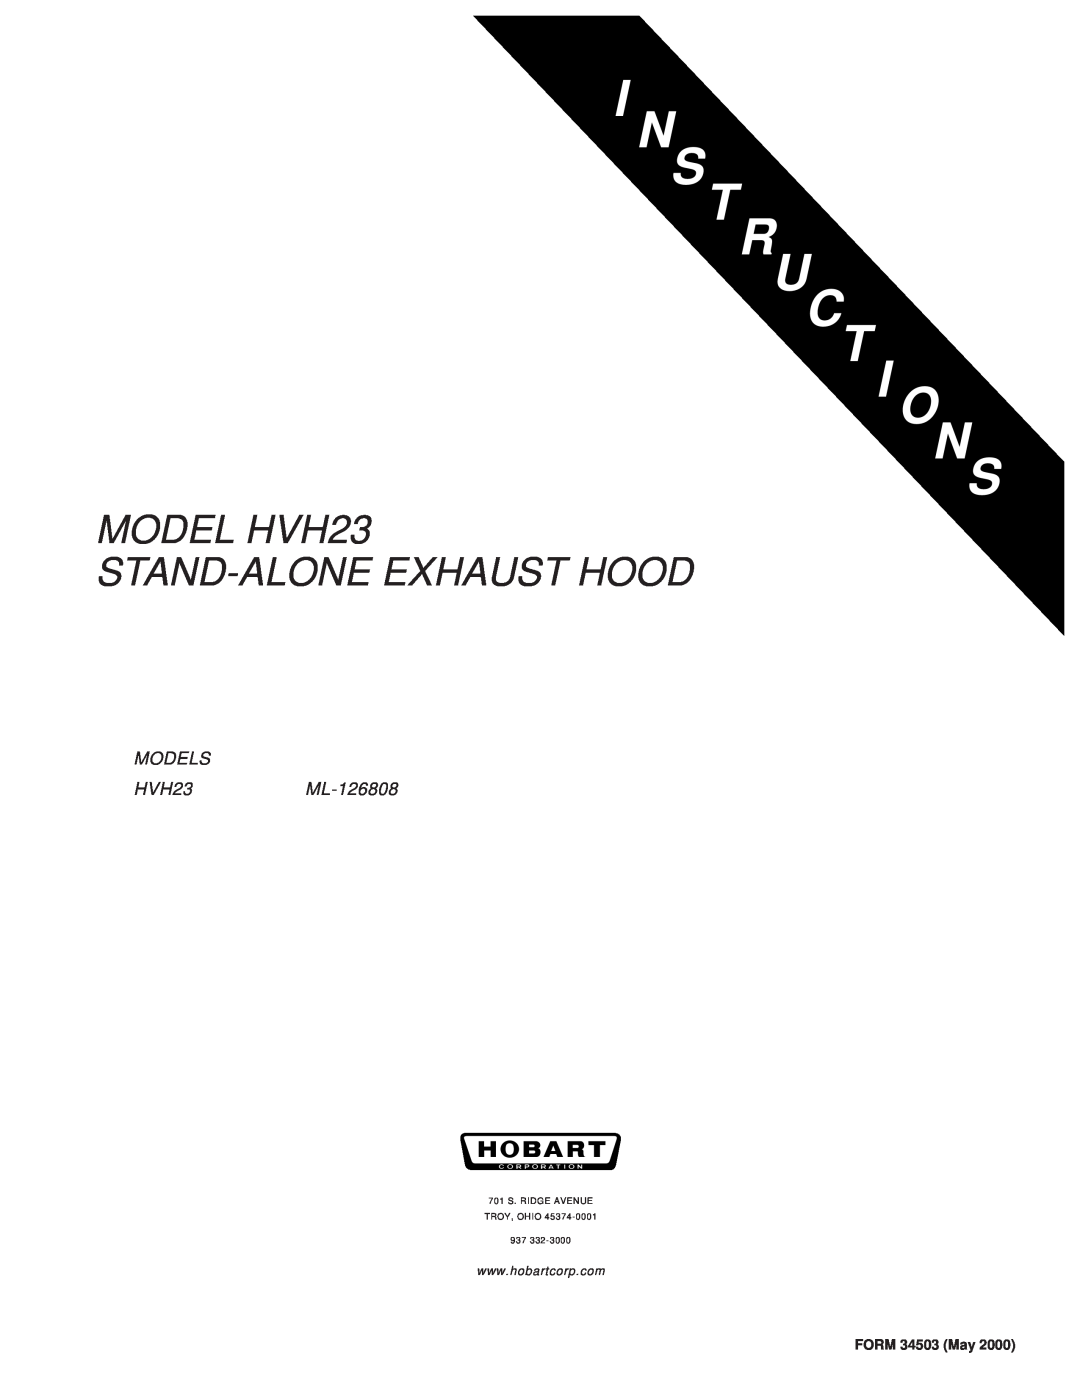 Hobart manual N S Truct I O Ns, MODEL HVH23, Stand-Alone Exhaust Hood, MODELS HVH23ML-126808, FORM 34503 May 